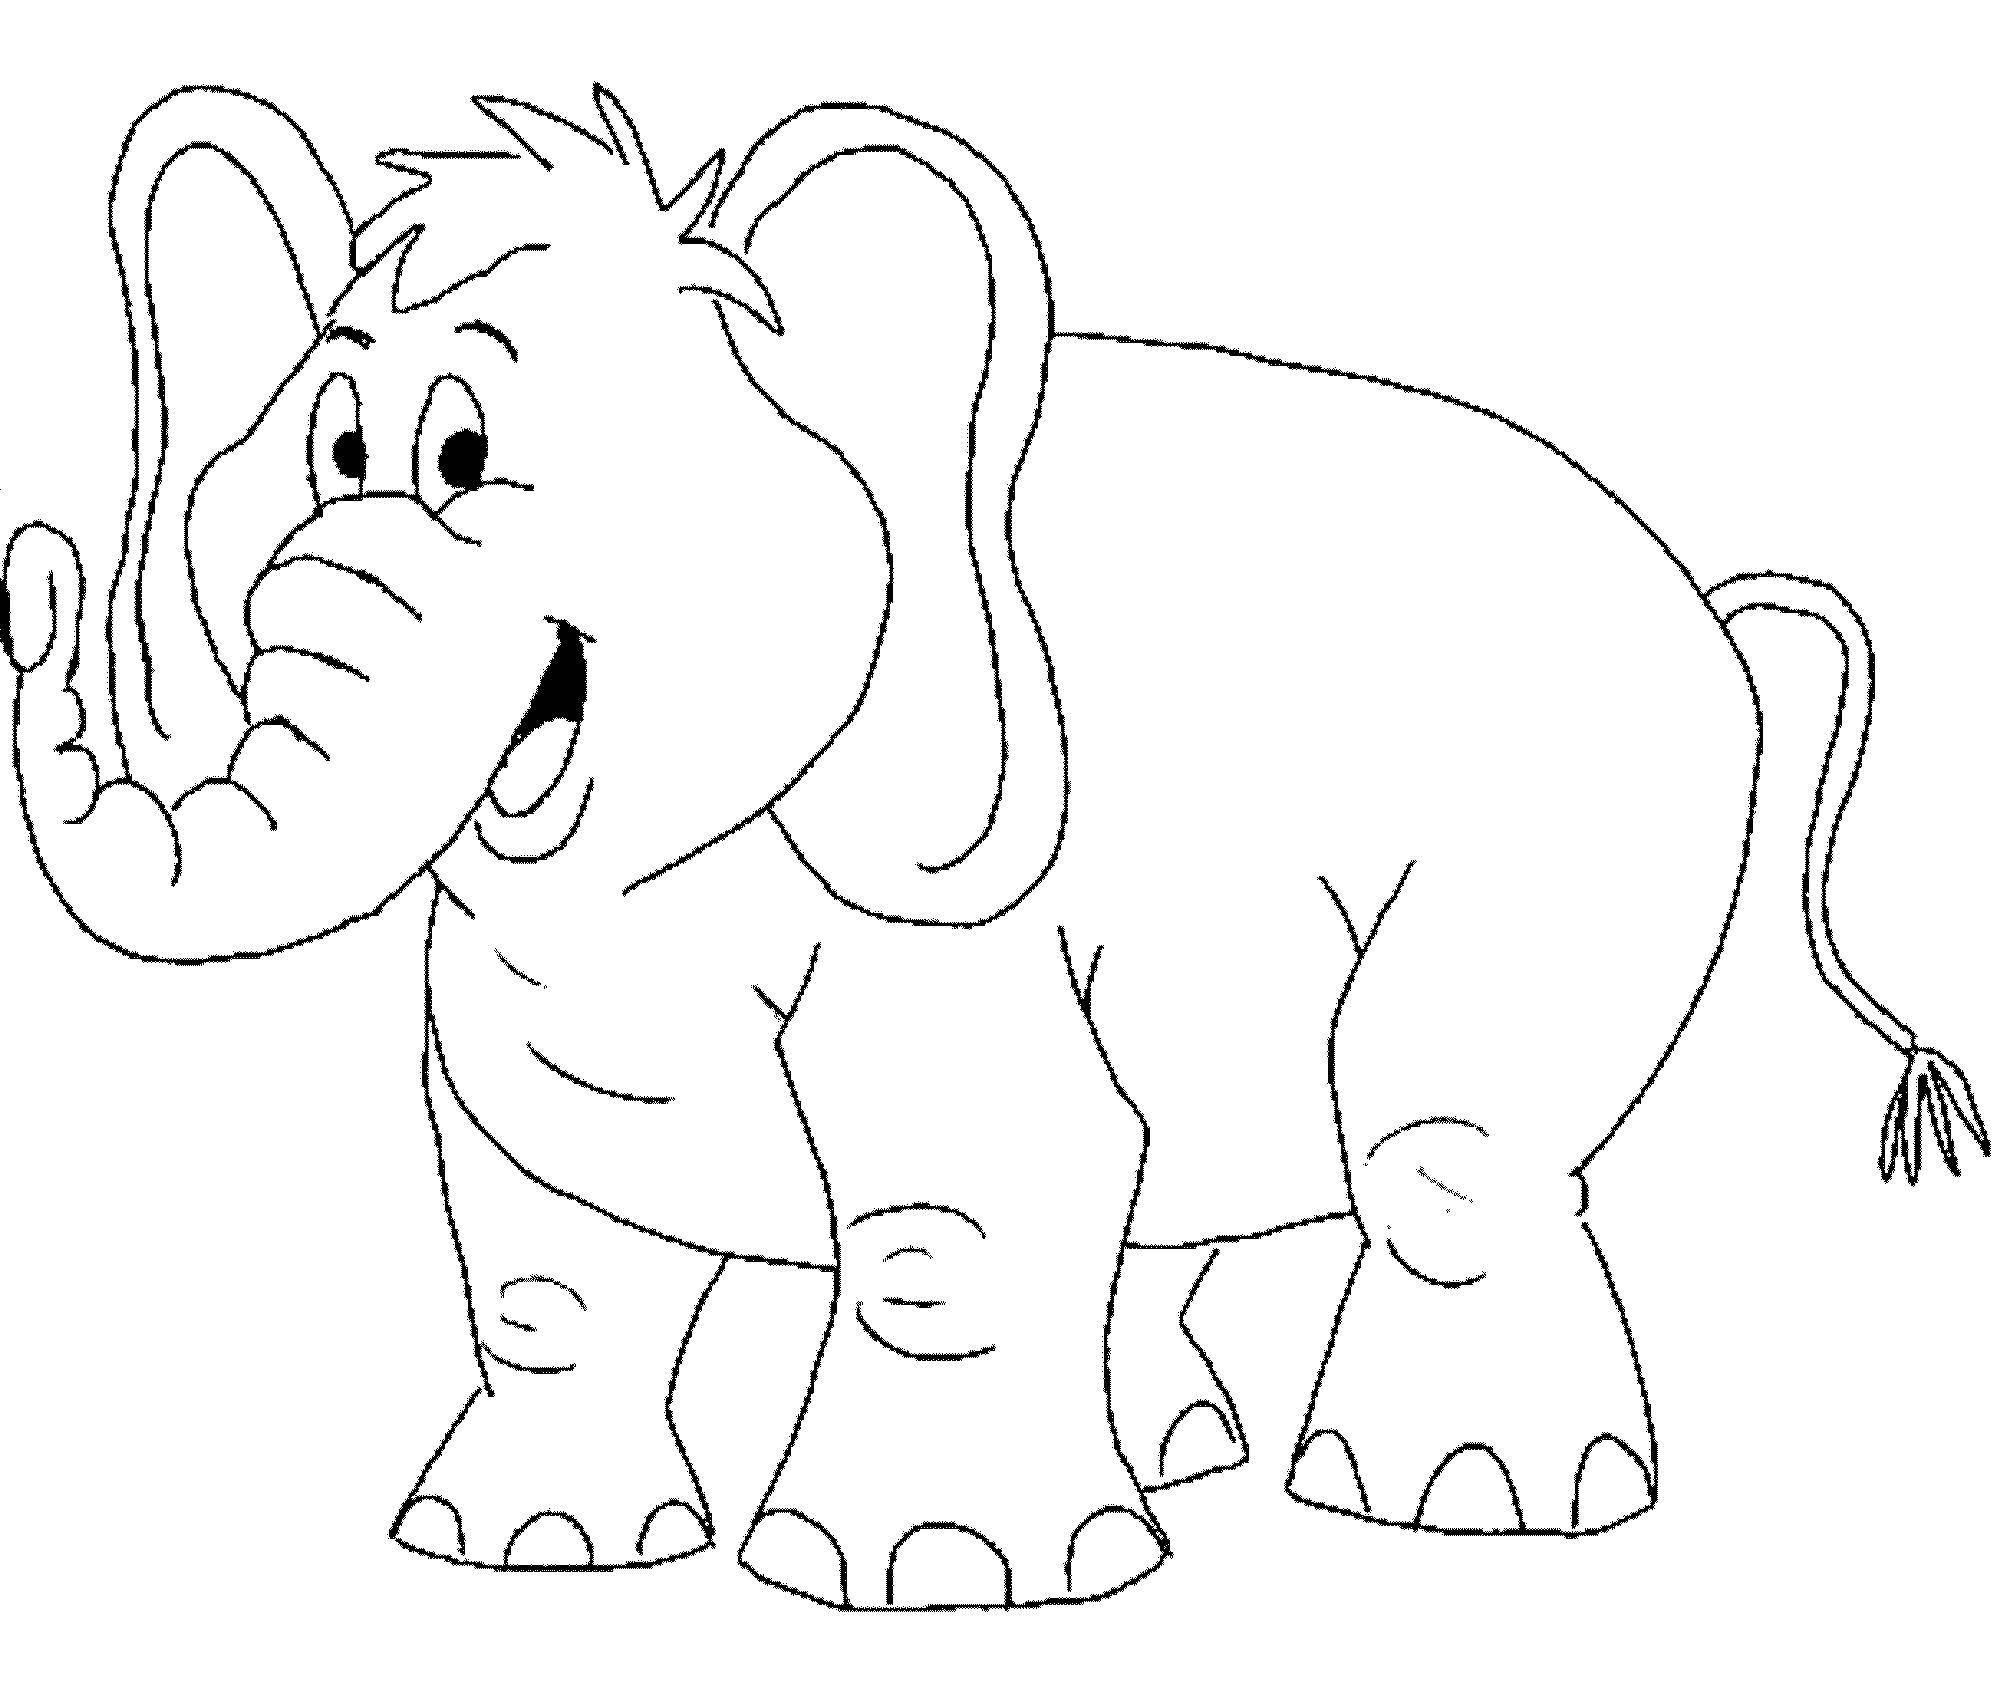 Опис: розмальовки  Слоник. Категорія: Тварини. Теги:  Тварини, слоненя.